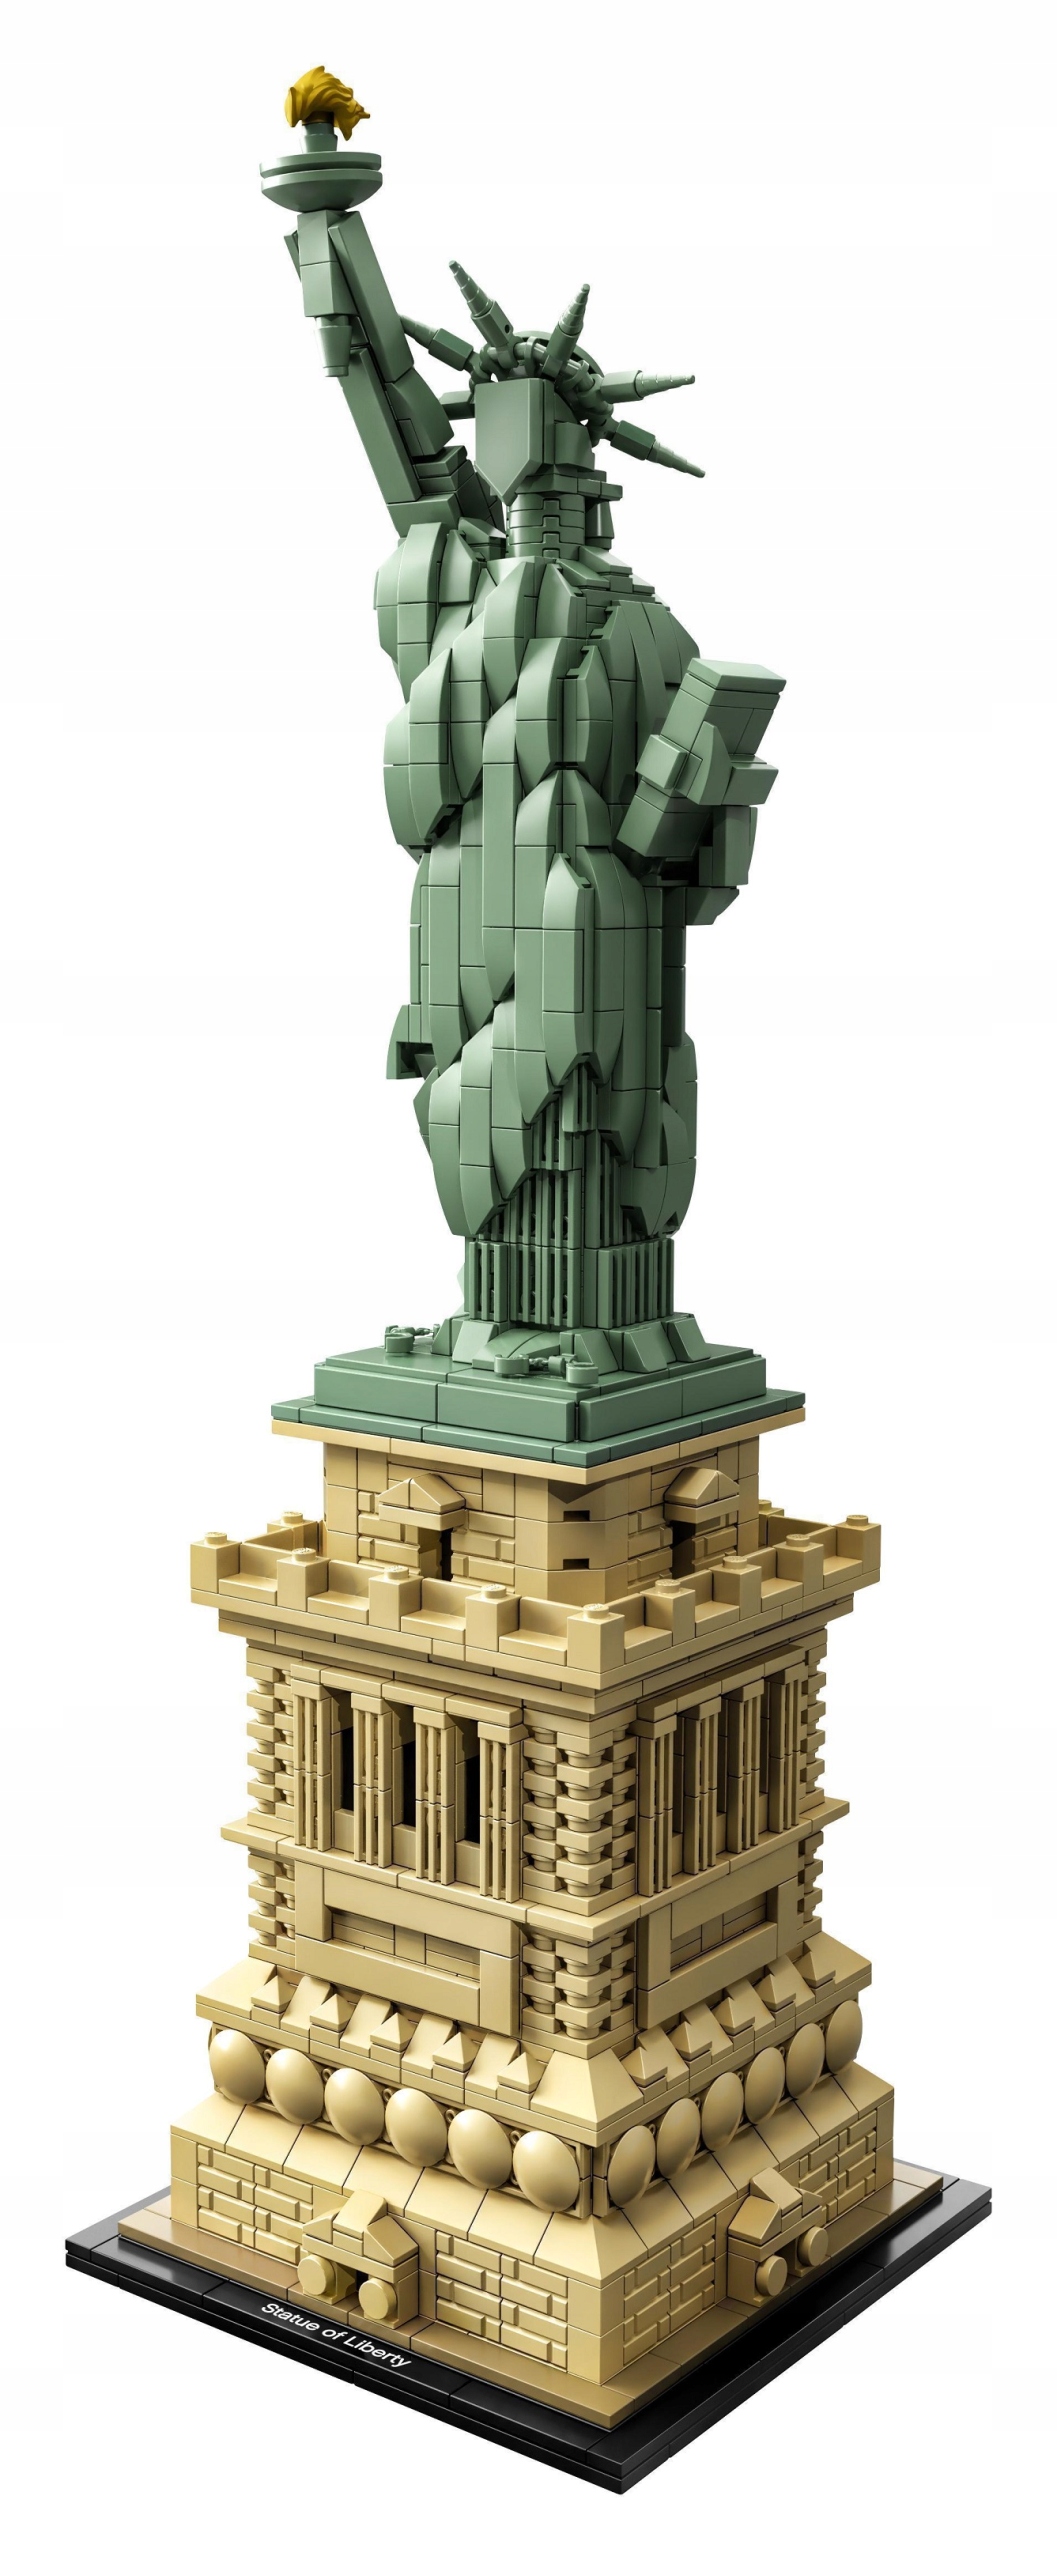 LEGO ARCHITECTURE Statue of Liberty 21042 Сертификаты, мнения, одобрения CE